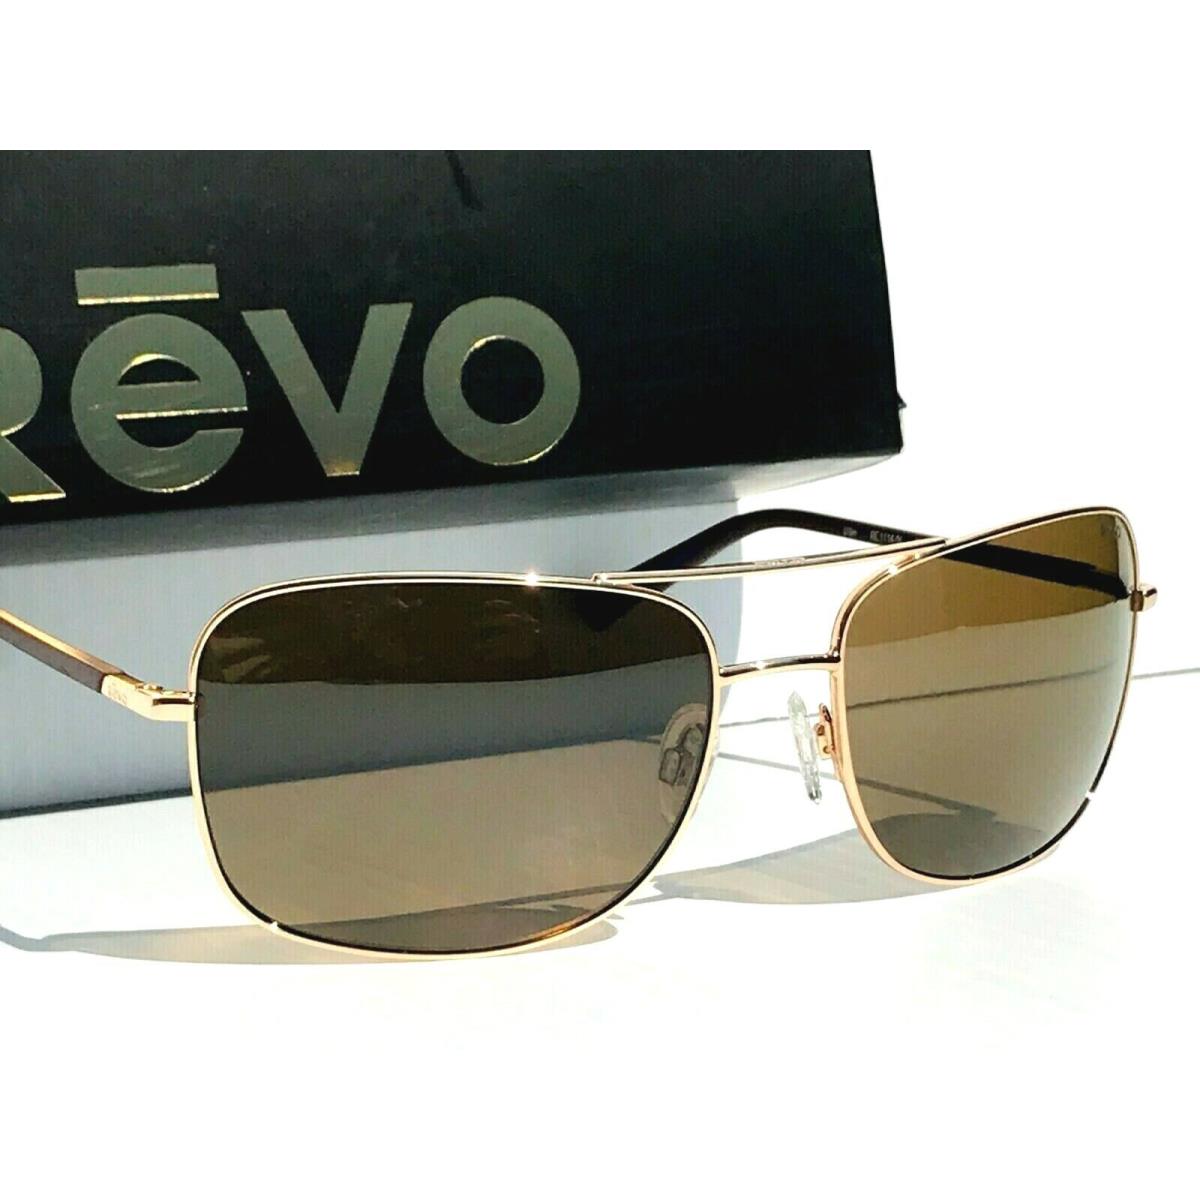 Revo sunglasses Summit - Gold Frame, Brown Lens